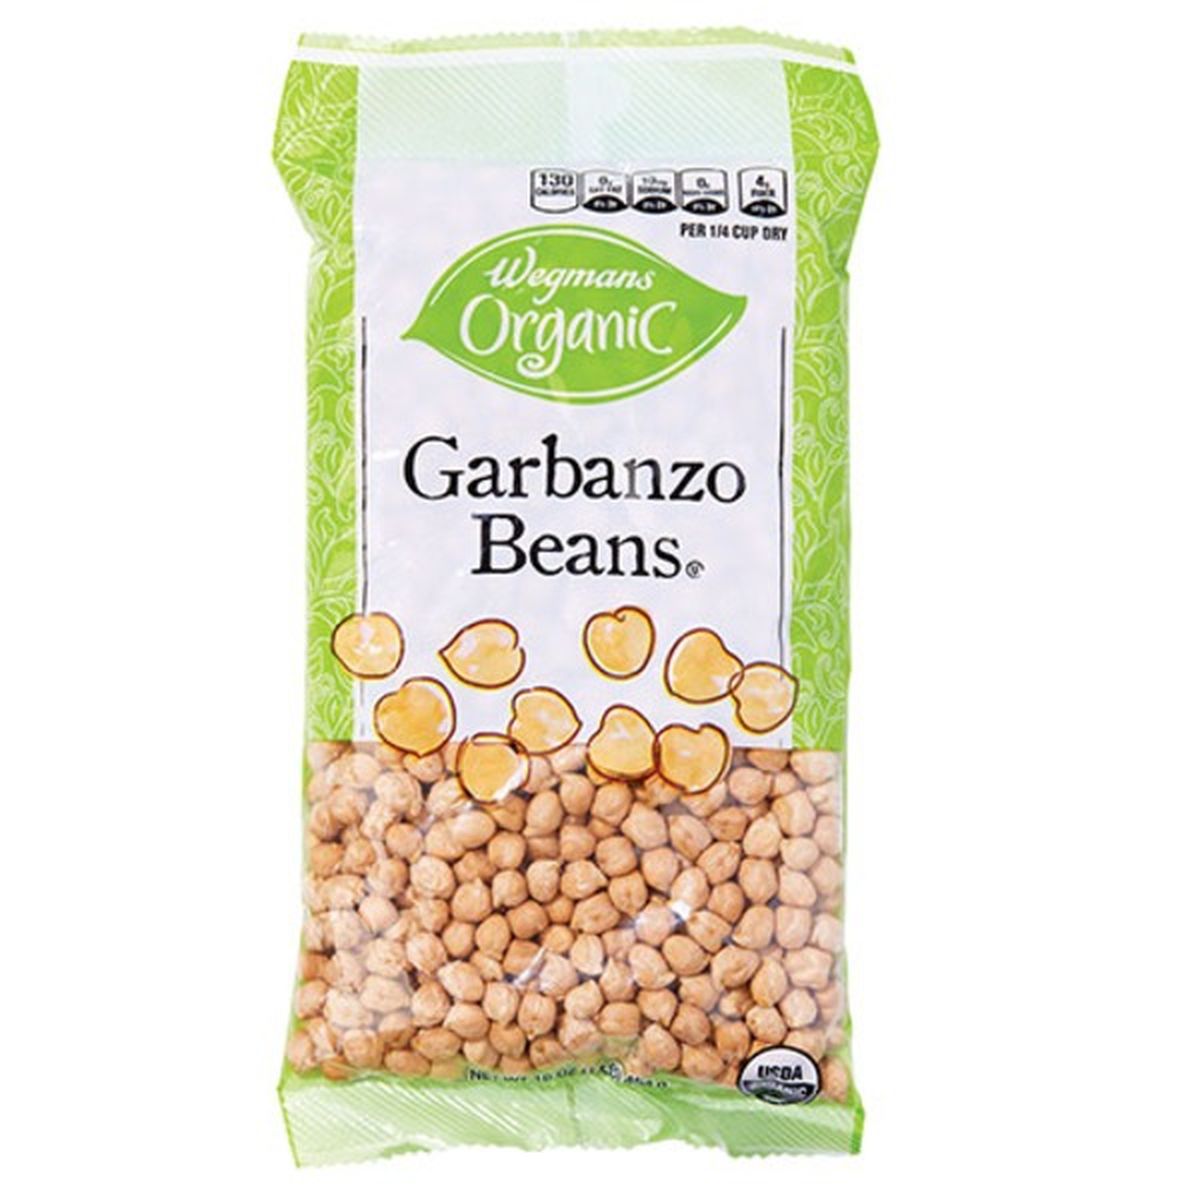 Calories in Wegmans Organic Garbanzo Beans, Dry